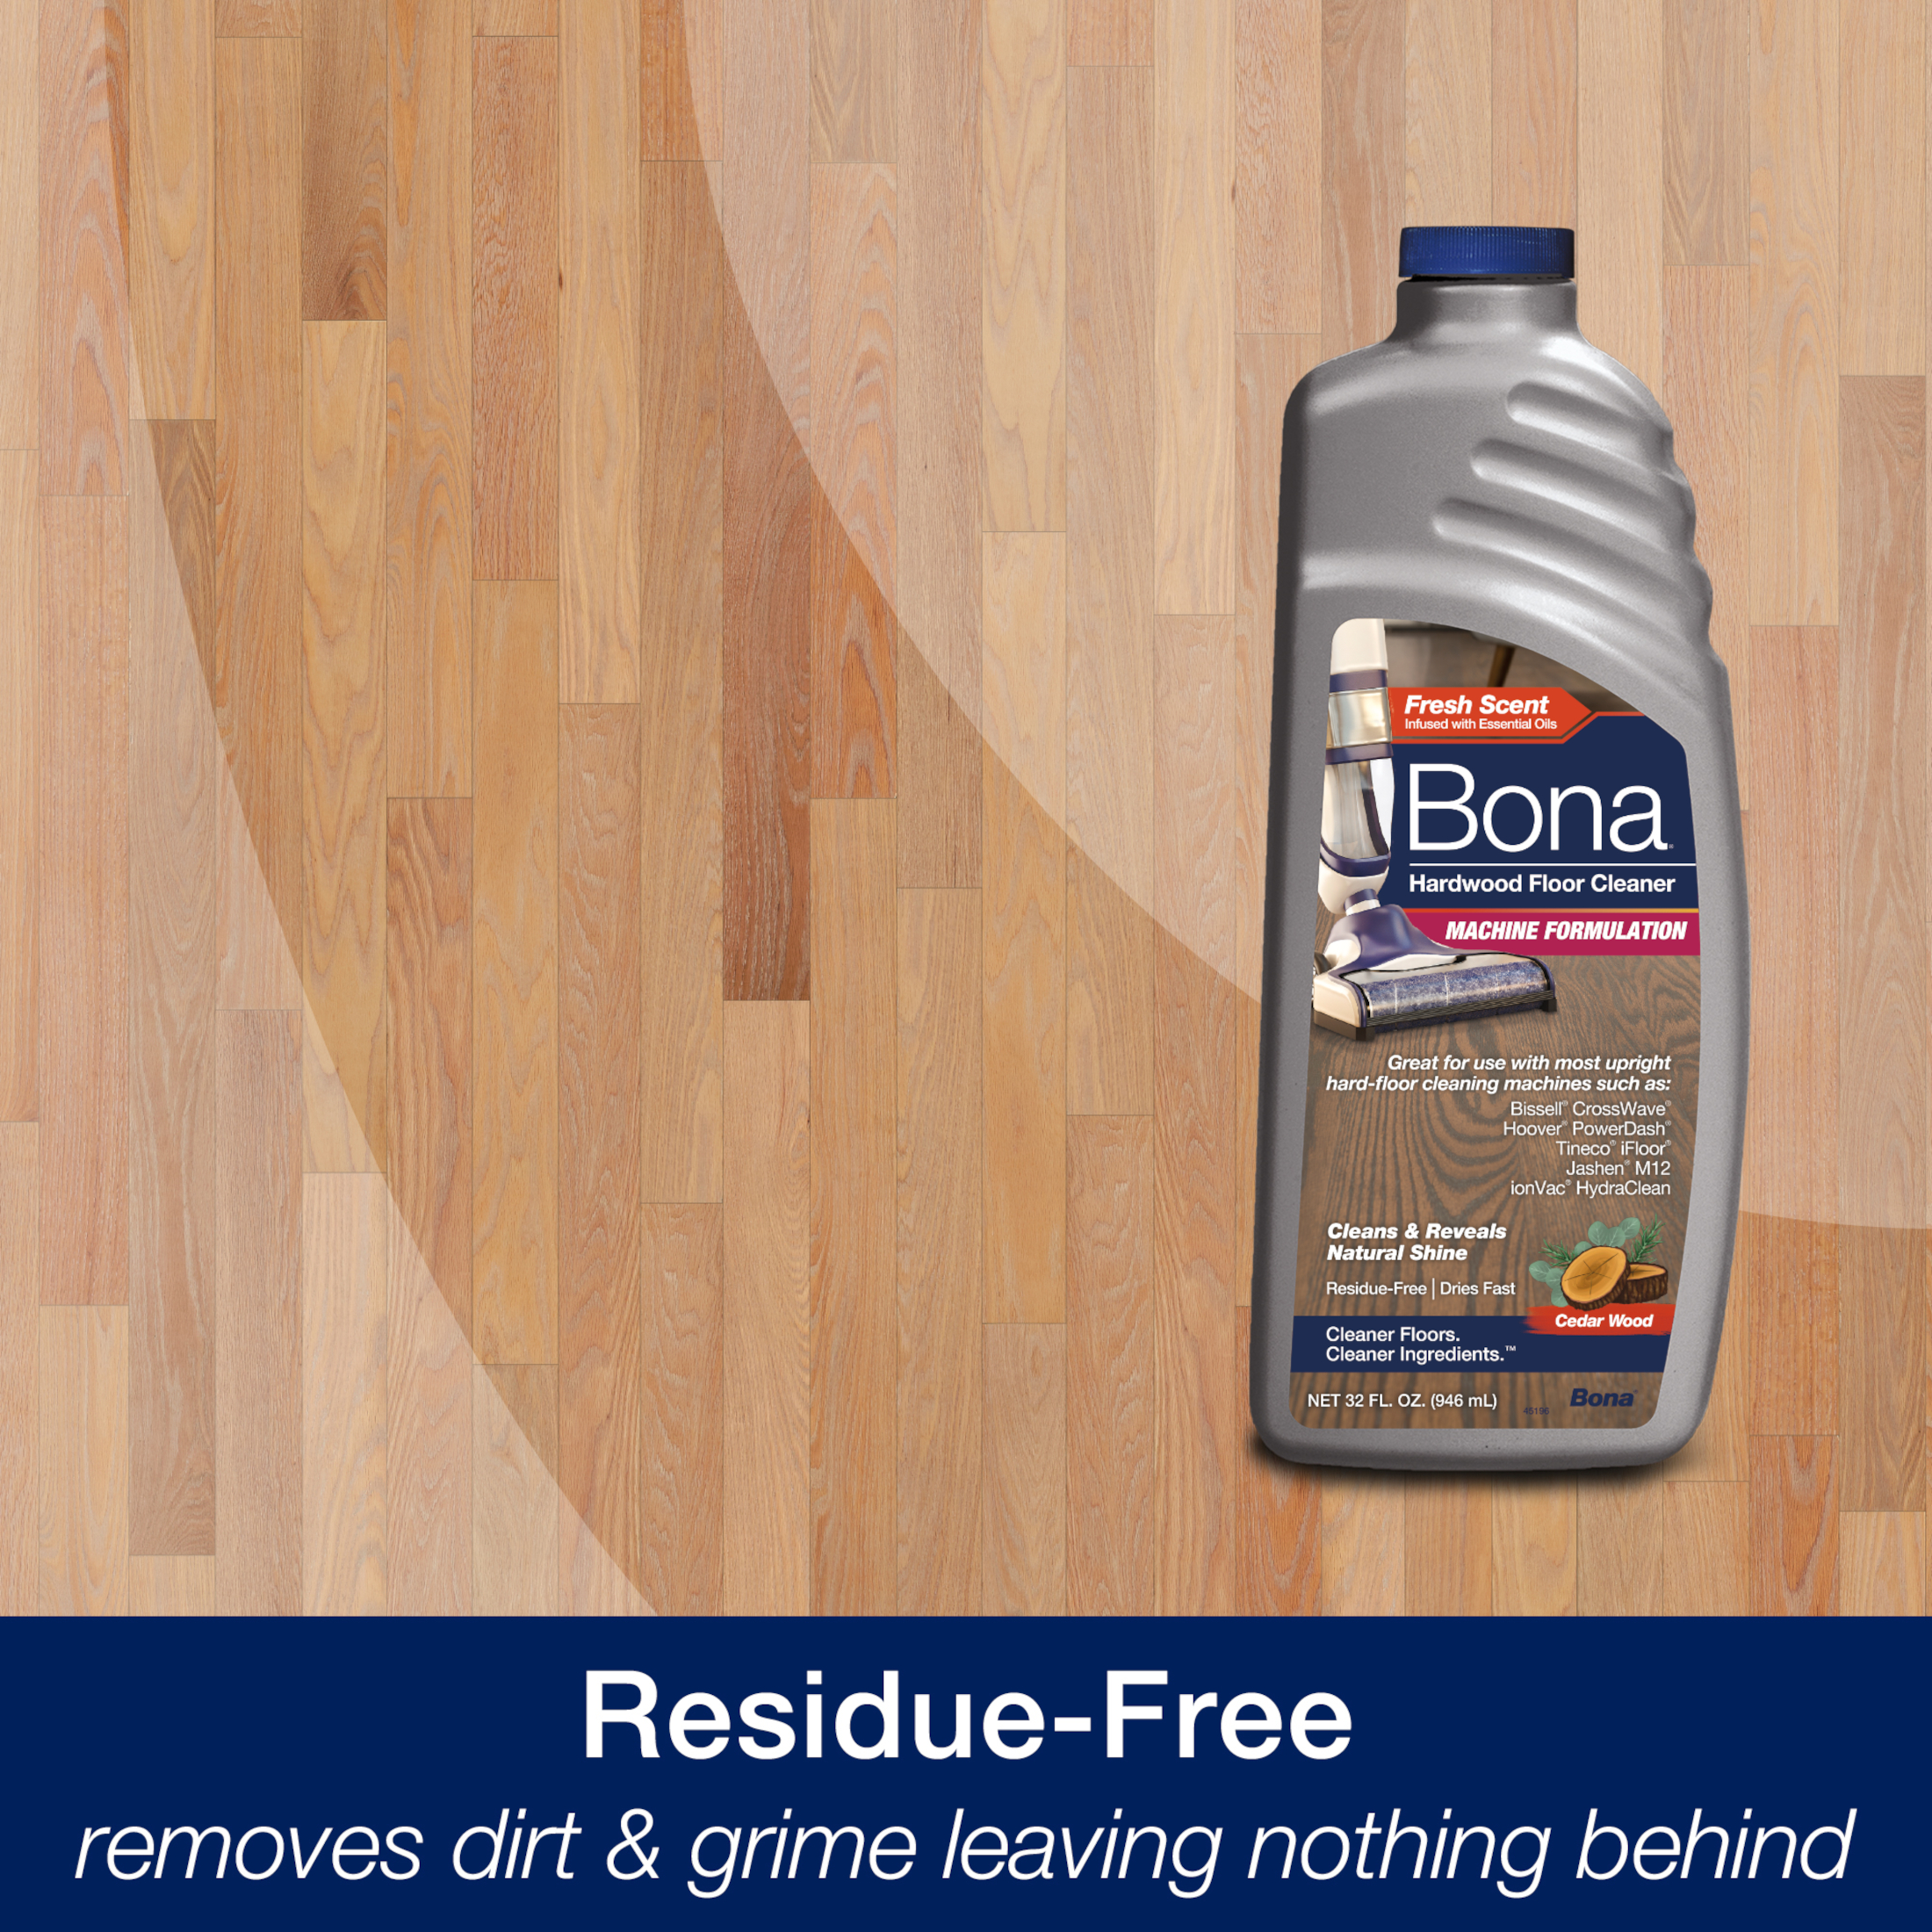 Bona Machine Concentrate Refill for Hardwood Flooring, Cedar Wood Scent, 32 Fluid Ounces - image 3 of 12